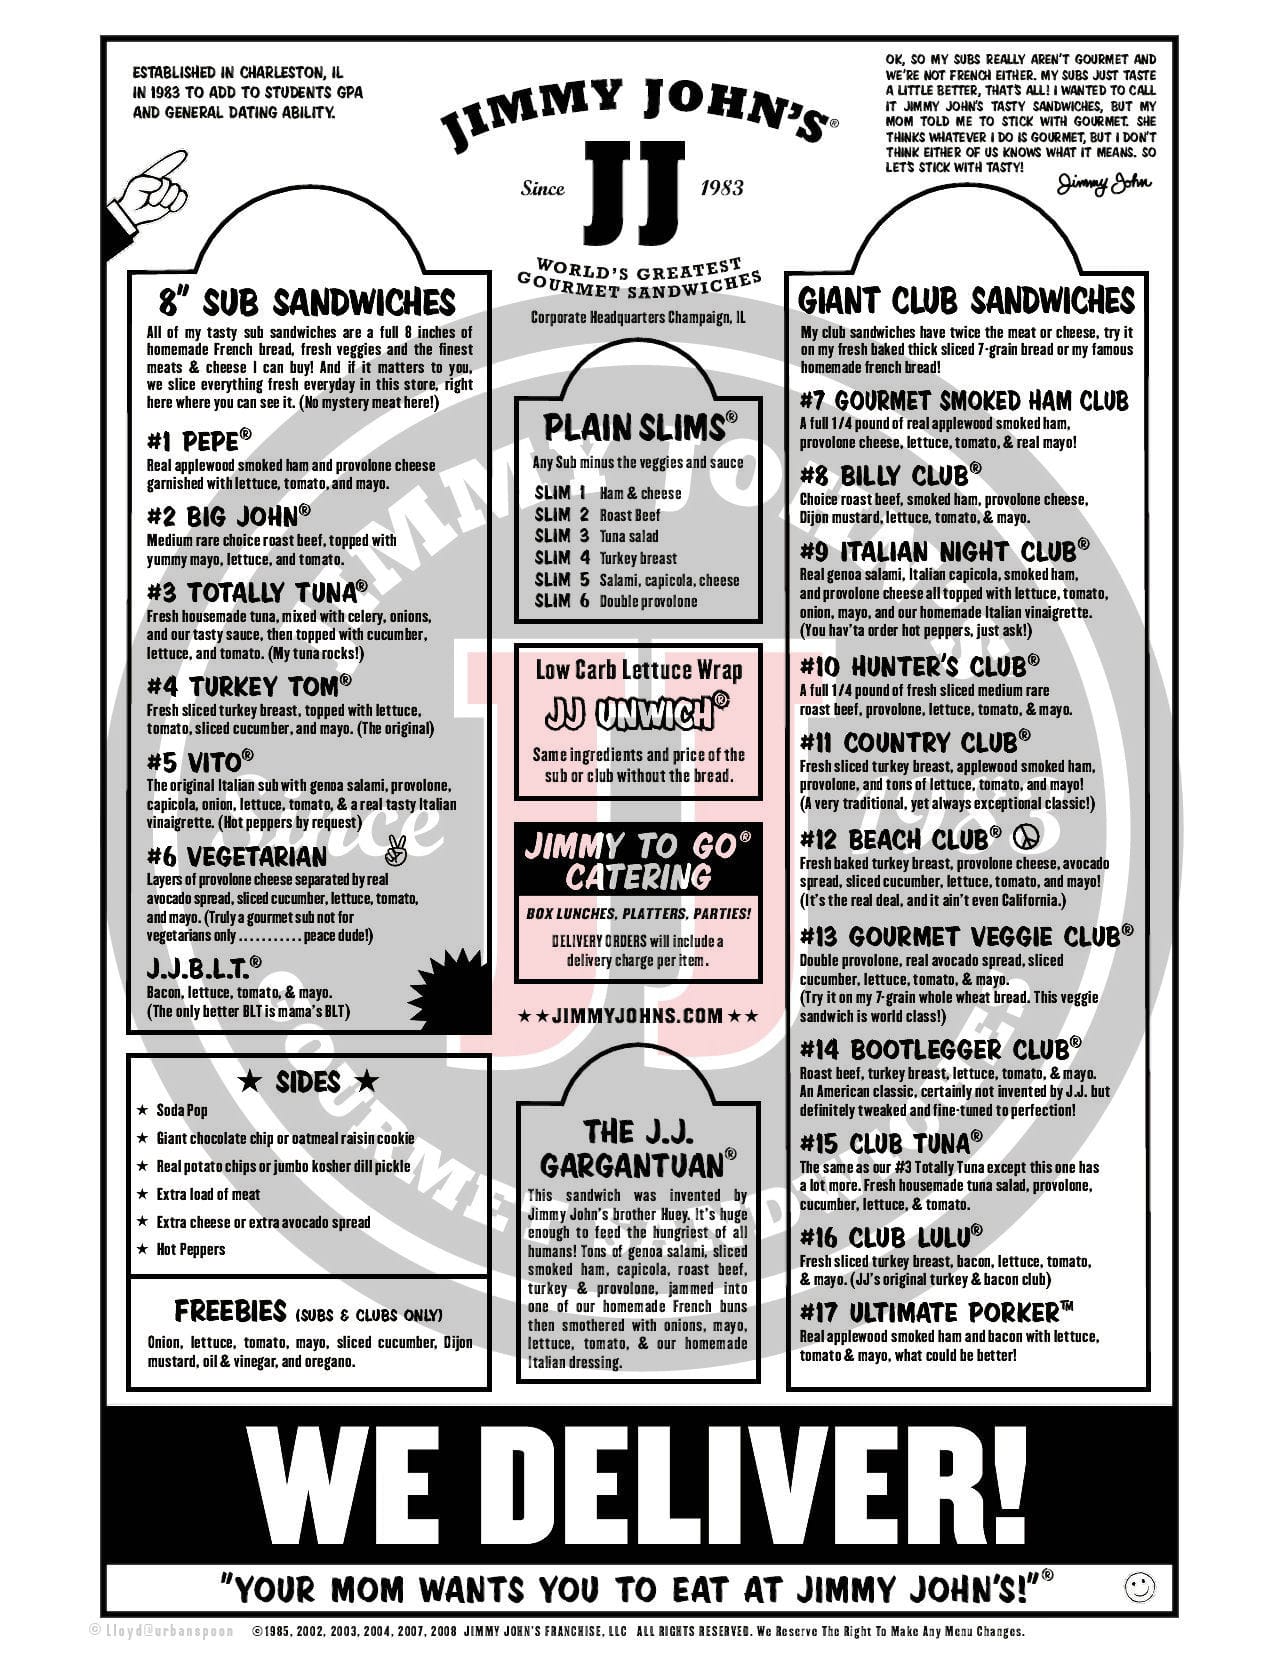 jimmy johns box lunch menu pdf